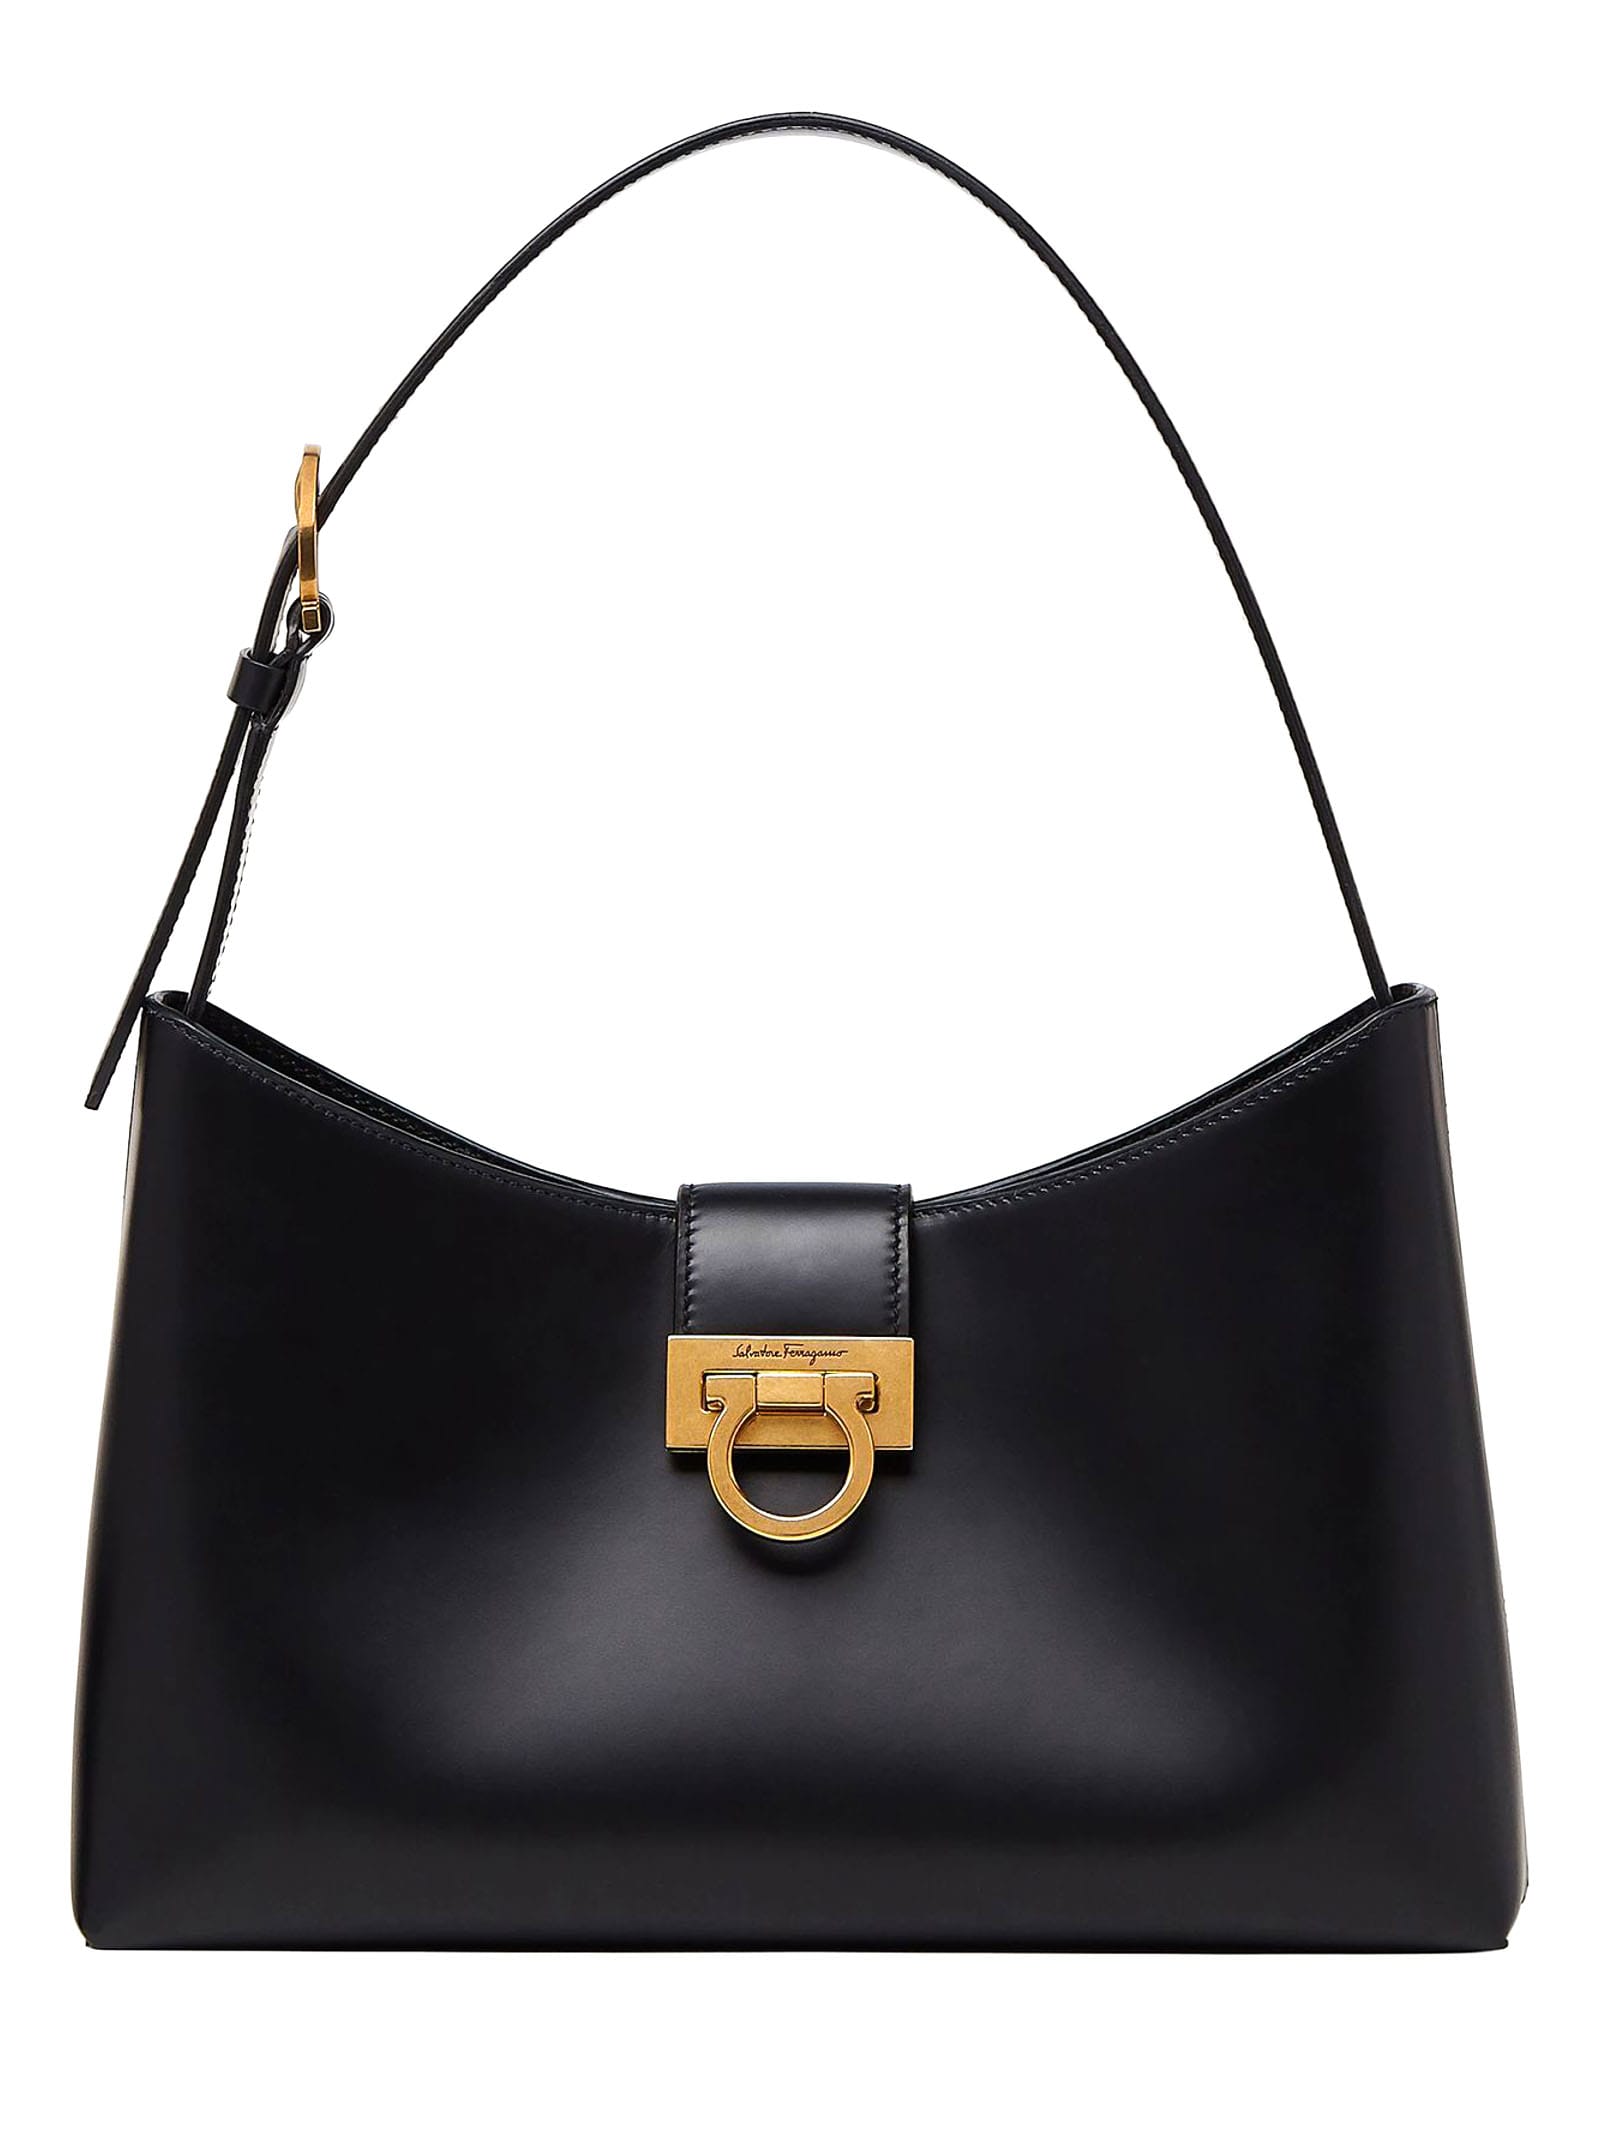 Salvatore Ferragamo Black Leather Trifolio Bag